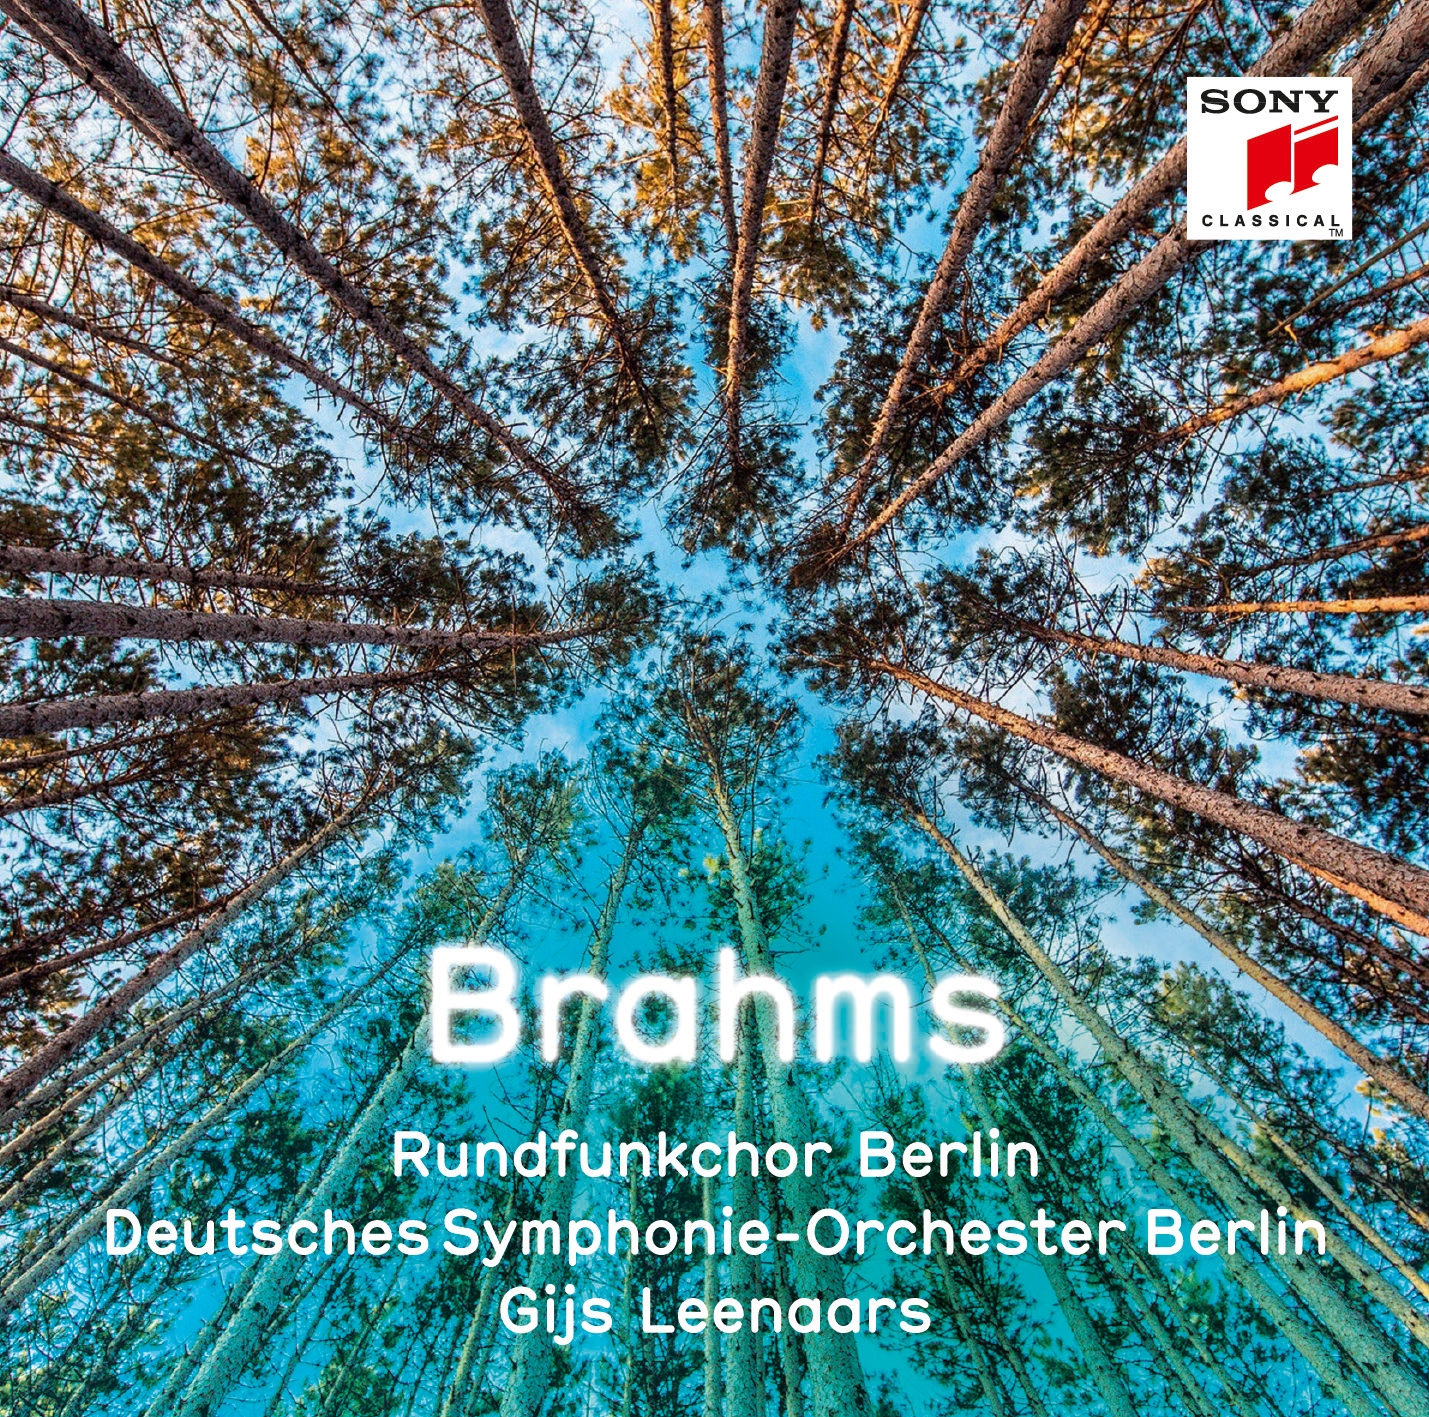 Rundfunkchor Berlin Brahms